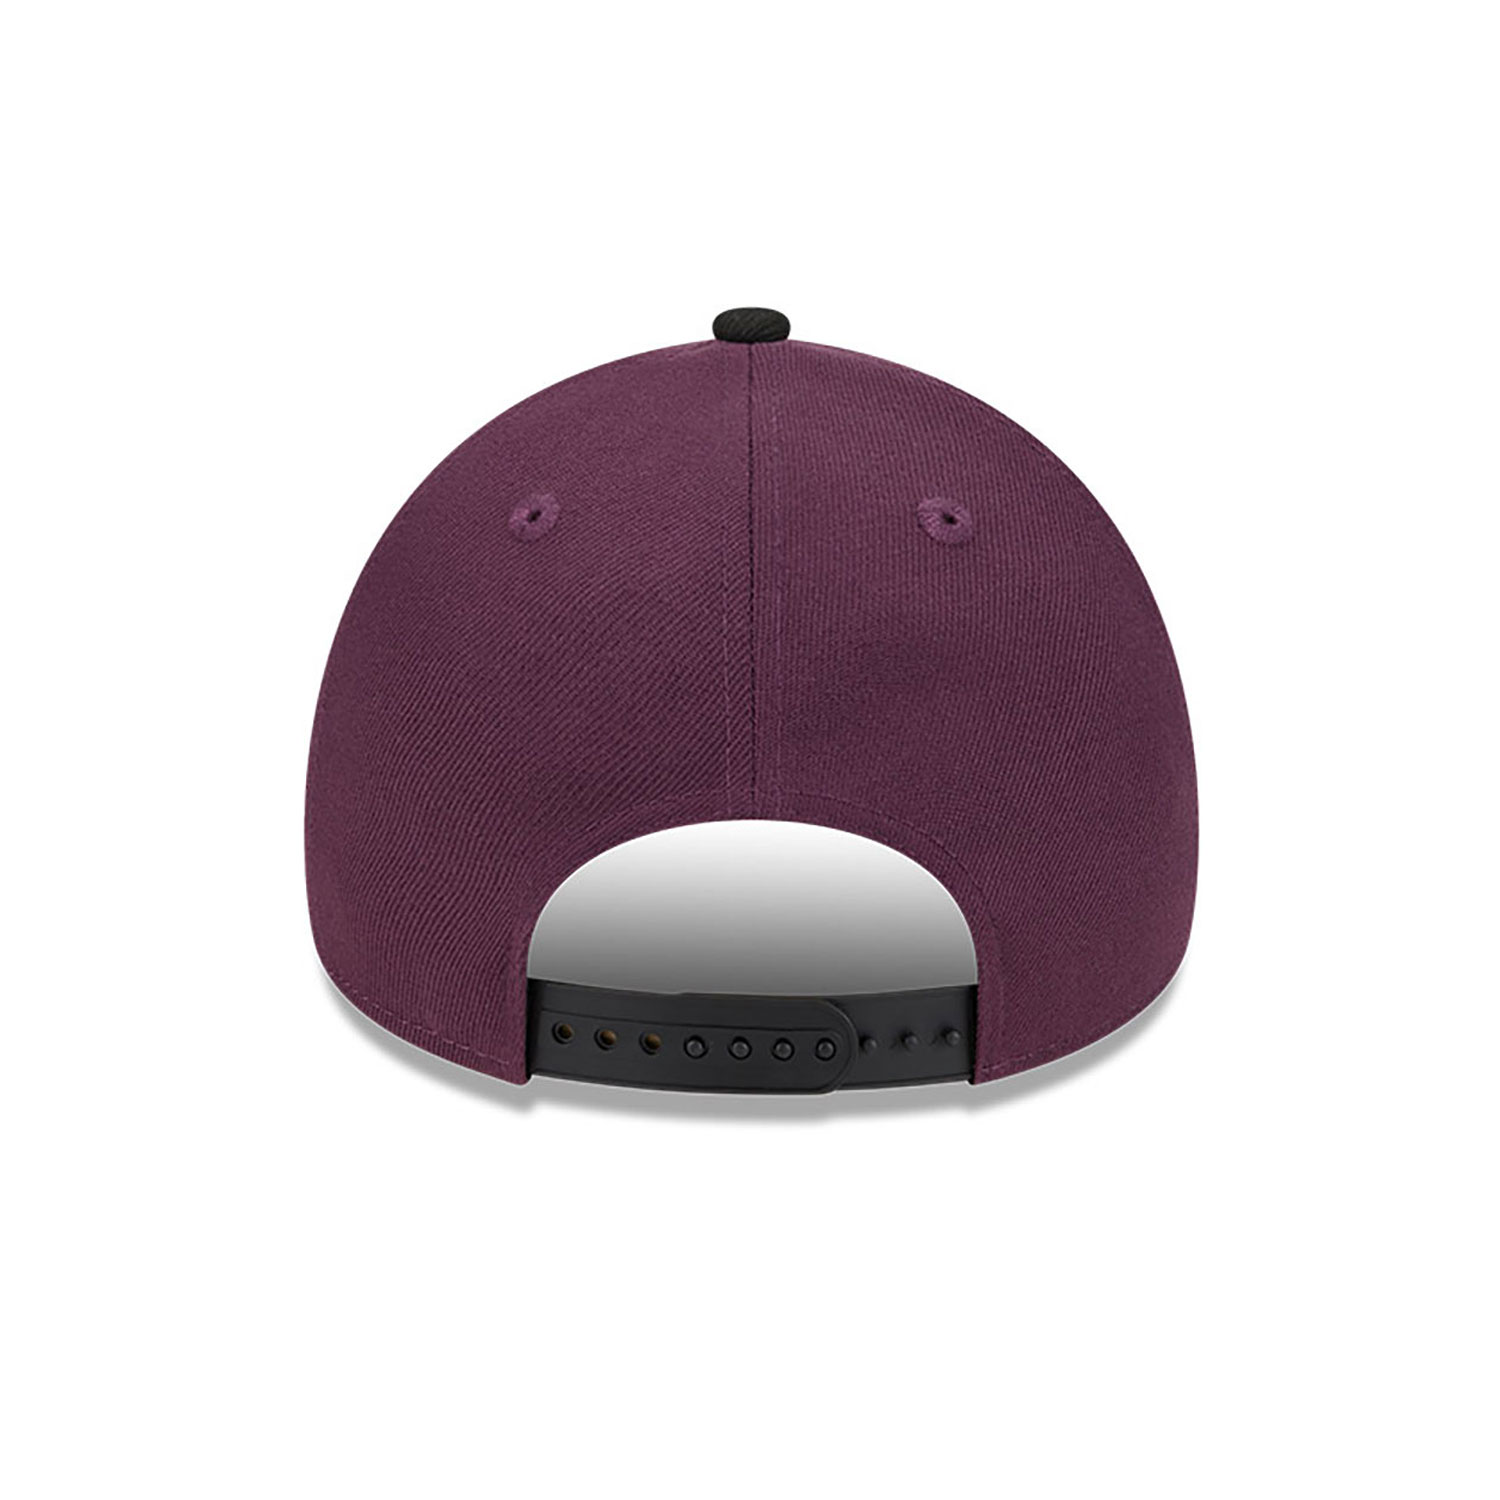 Philadelphia Phillies Two-Tone Dark Purple 9FORTY A-Frame Adjustable Cap